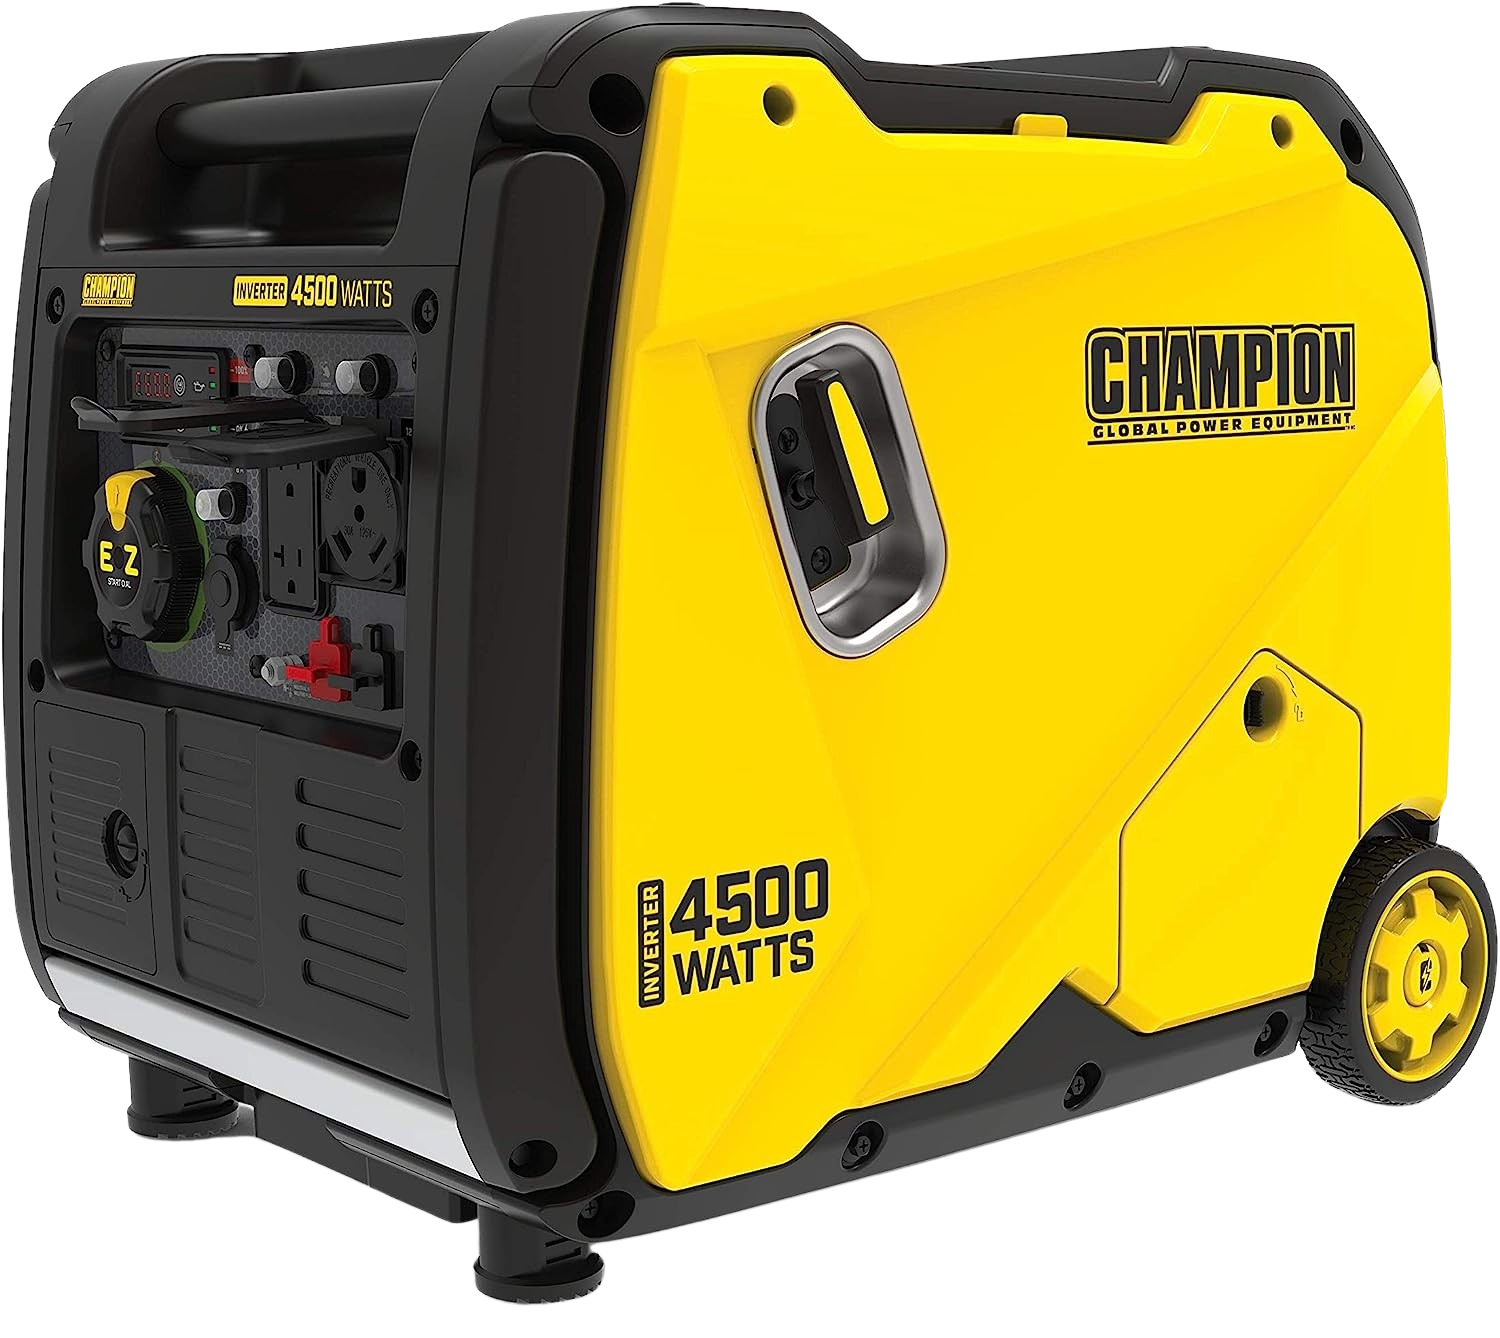 Champion 200989 3500W/4500W Inverter Gas Generator New